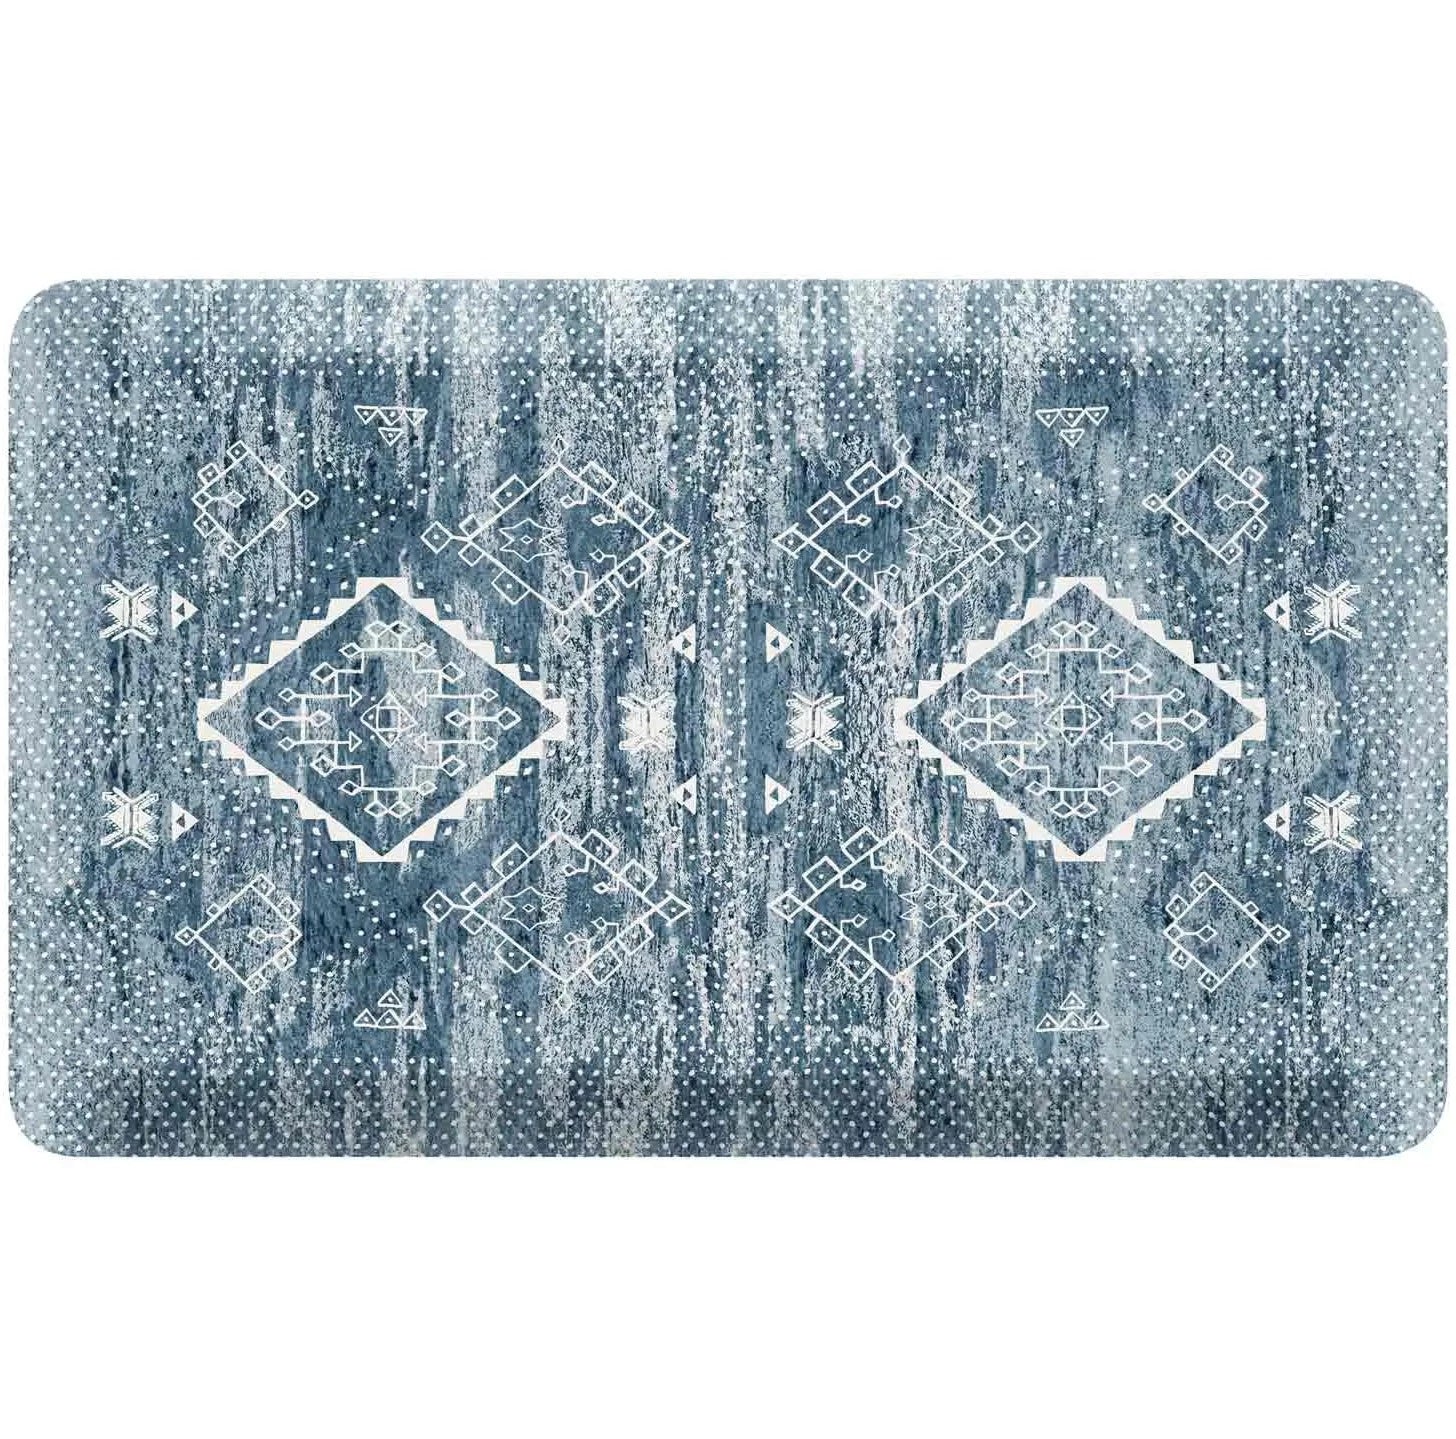 Ula Indigo Blue Minimal Boho Pattern kitchen mat shown in size 22x36